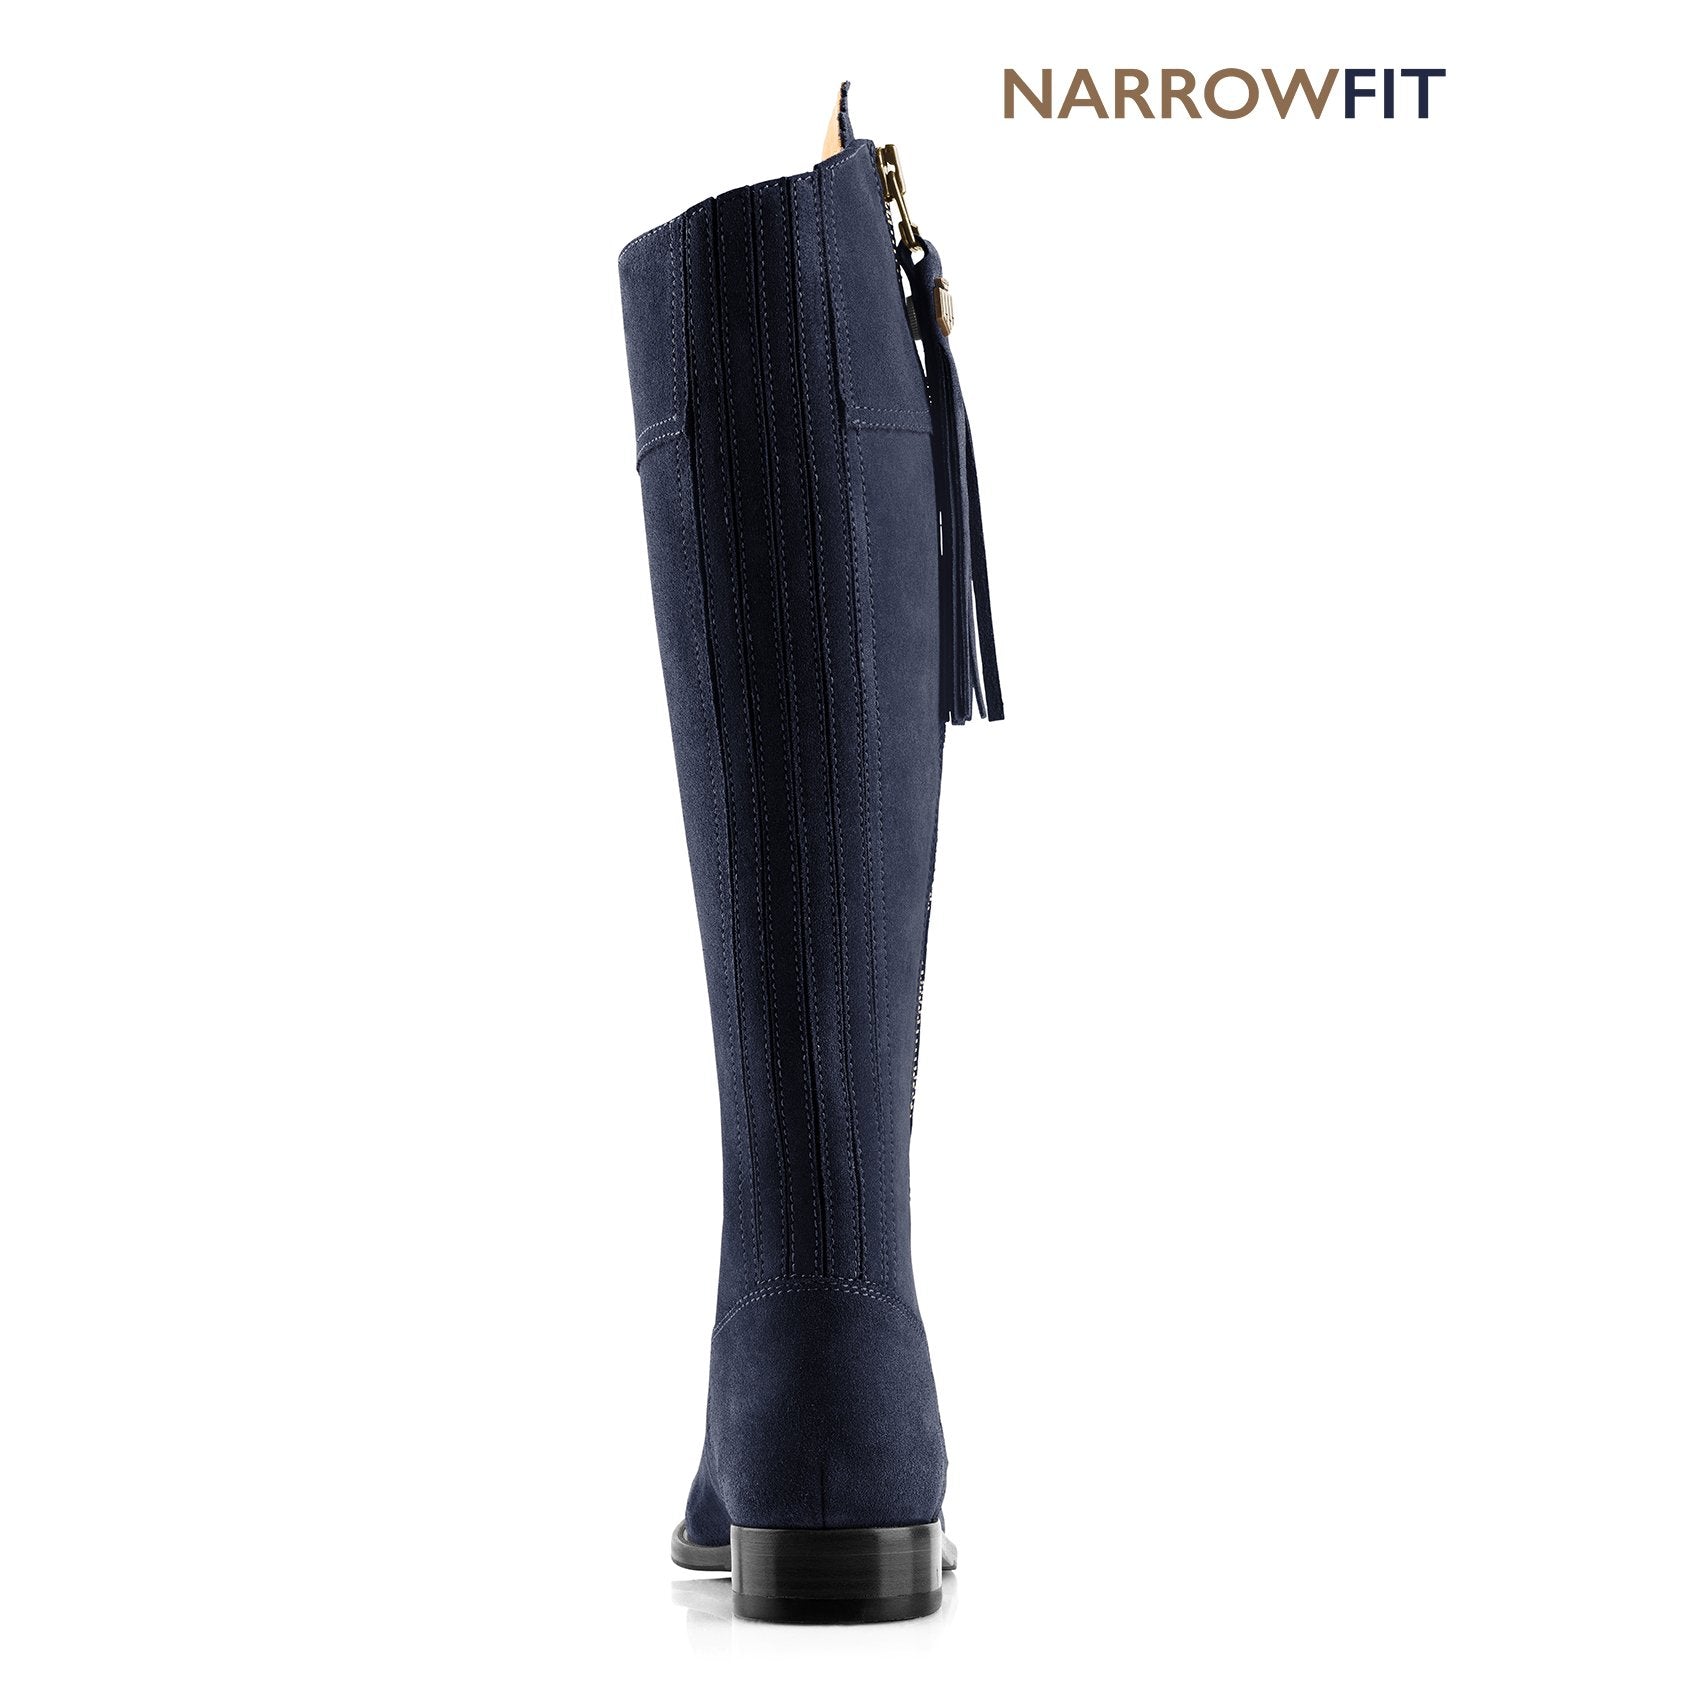 Narrow Fit Regina - Navy Suede Tall Boots FAIRFAX & FAVOR